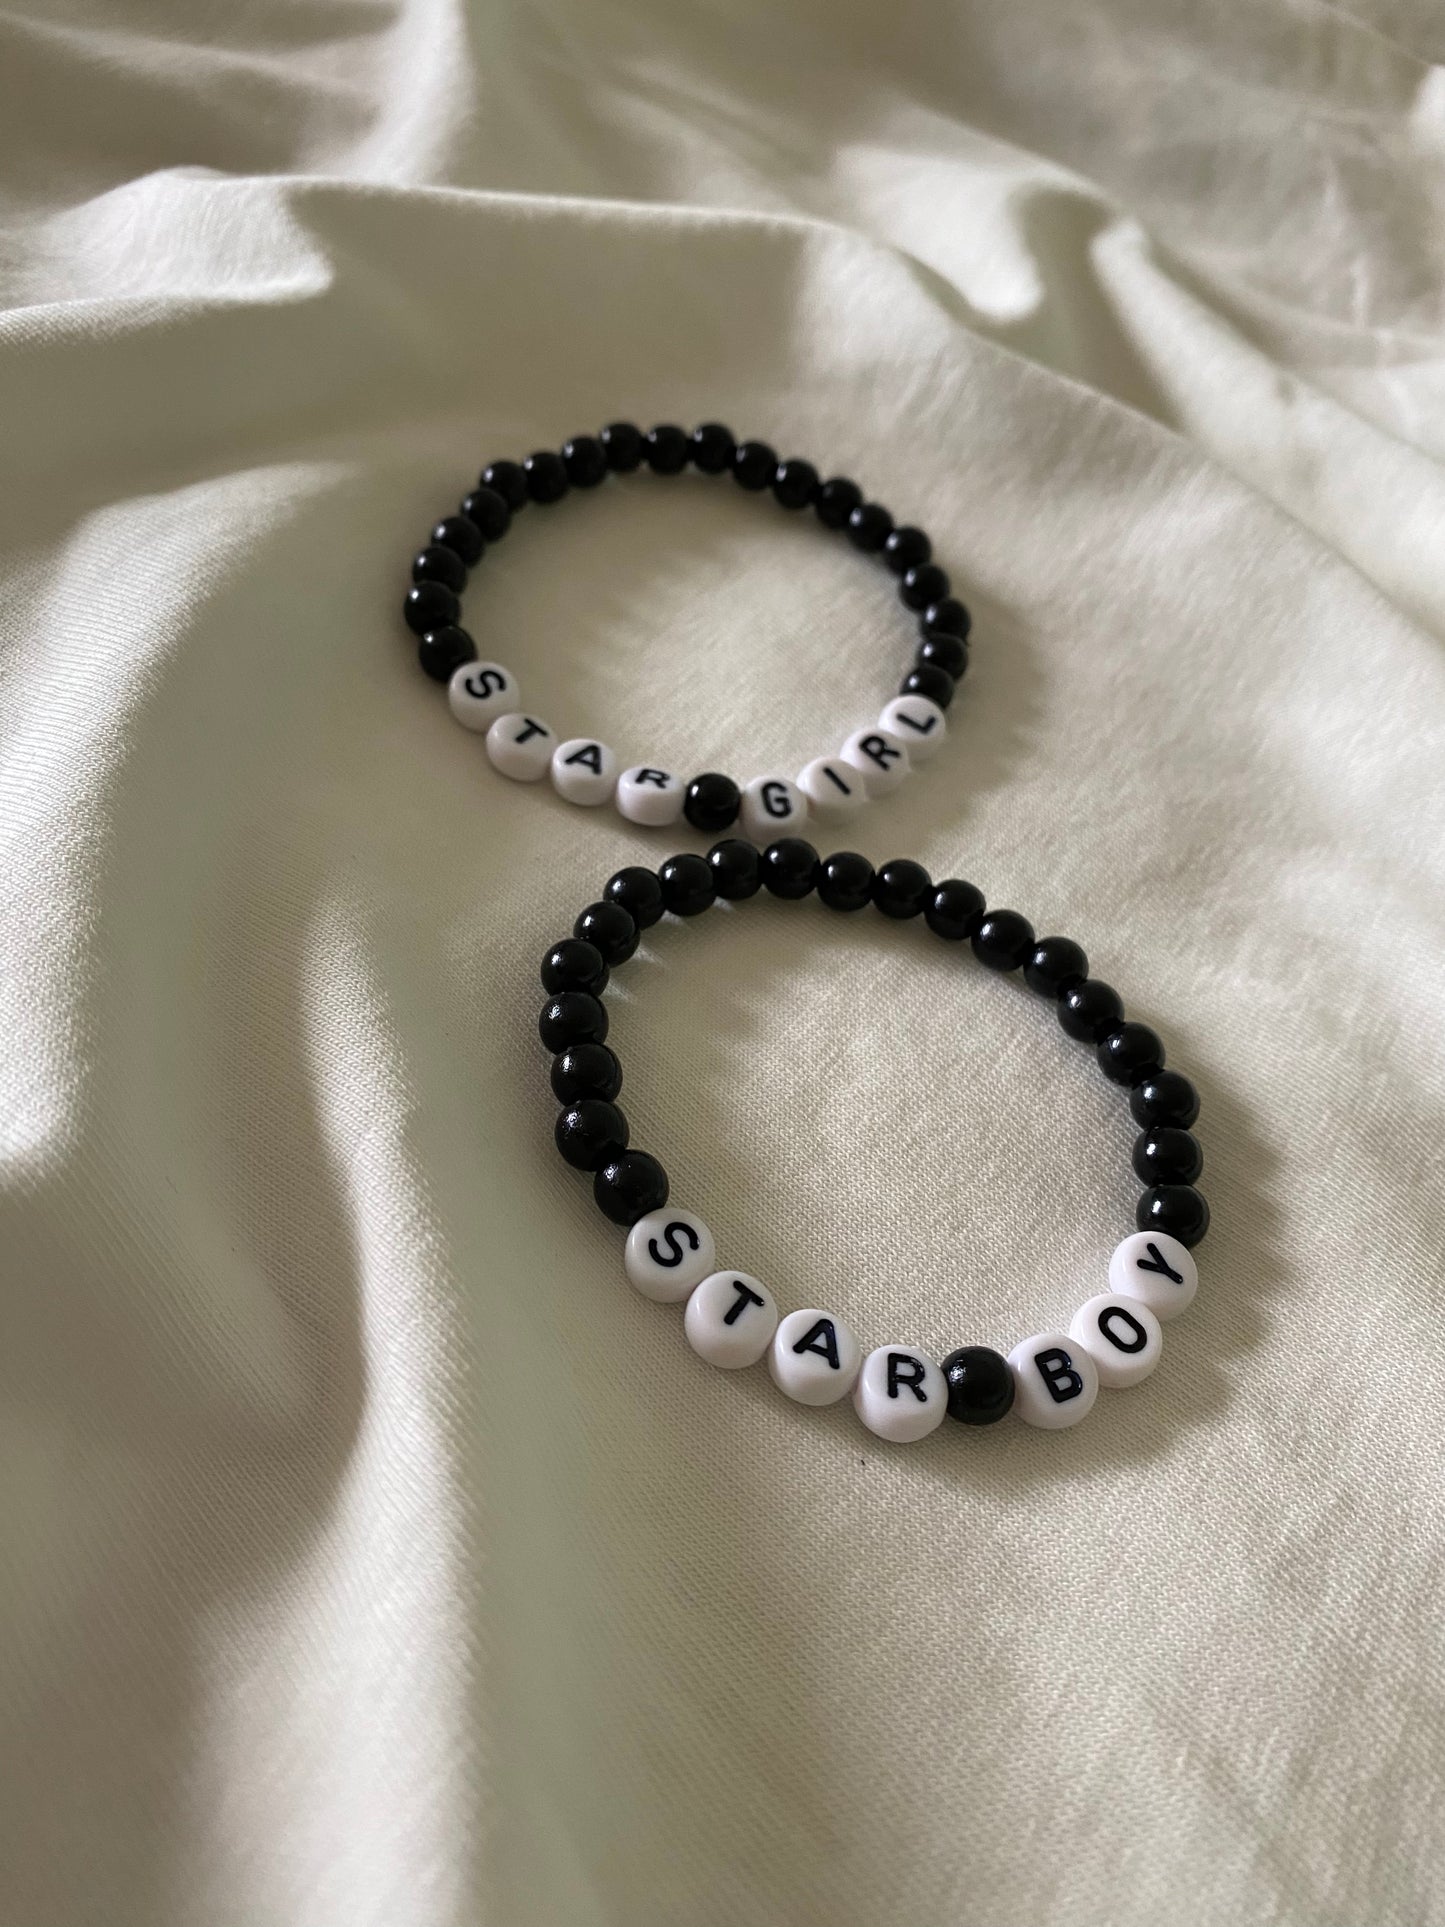 Star boy/girl matching bracelets